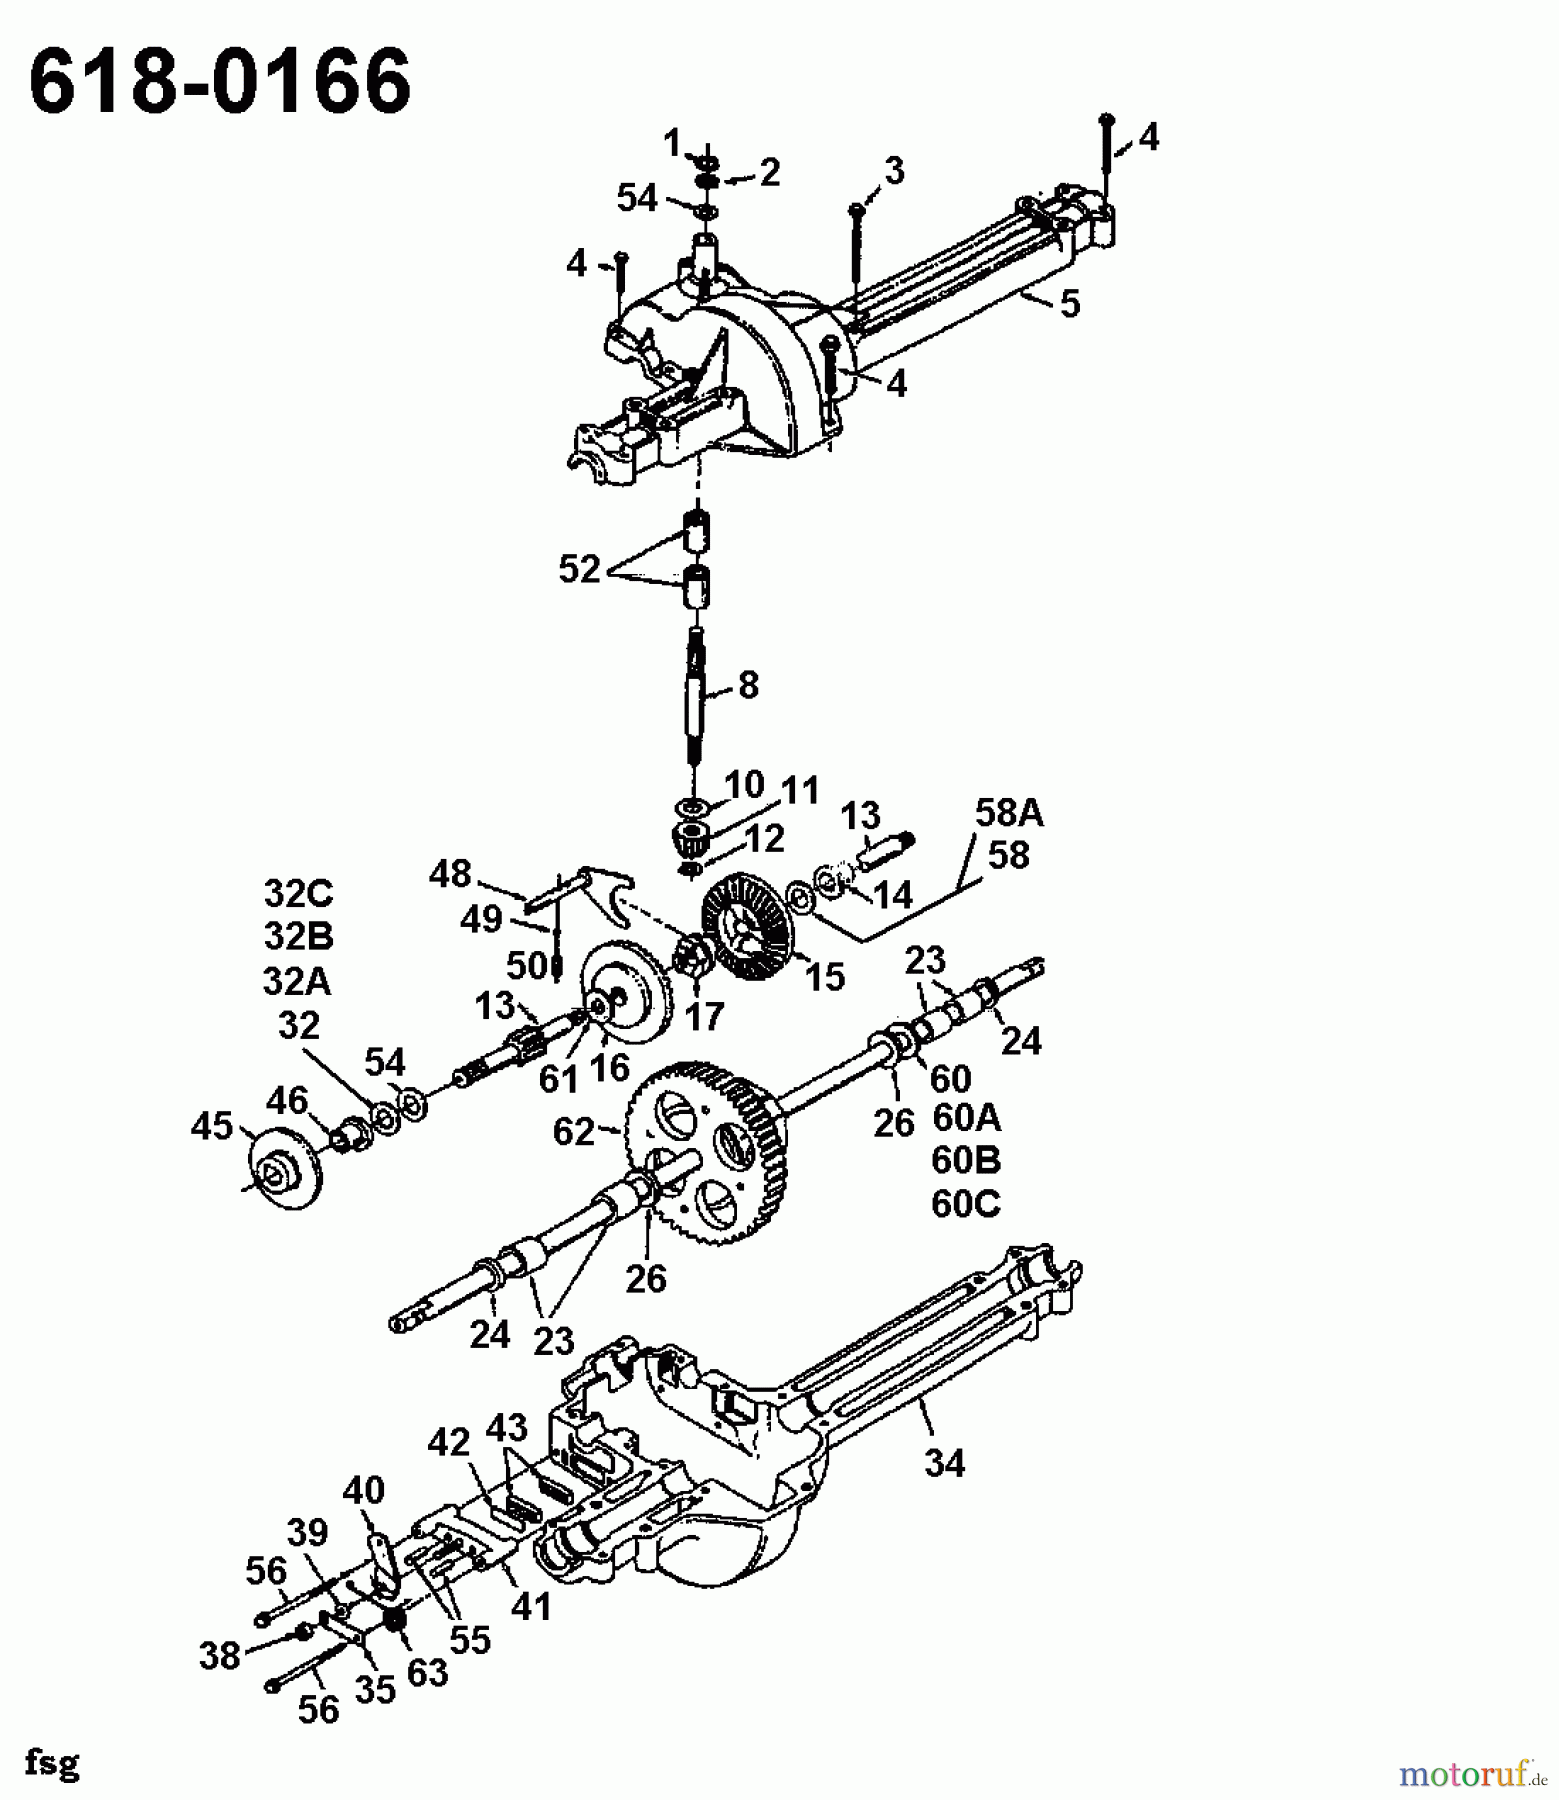  Gutbrod Rasentraktoren Sprint 1700 04207.02  (1996) Getriebe 618-0166